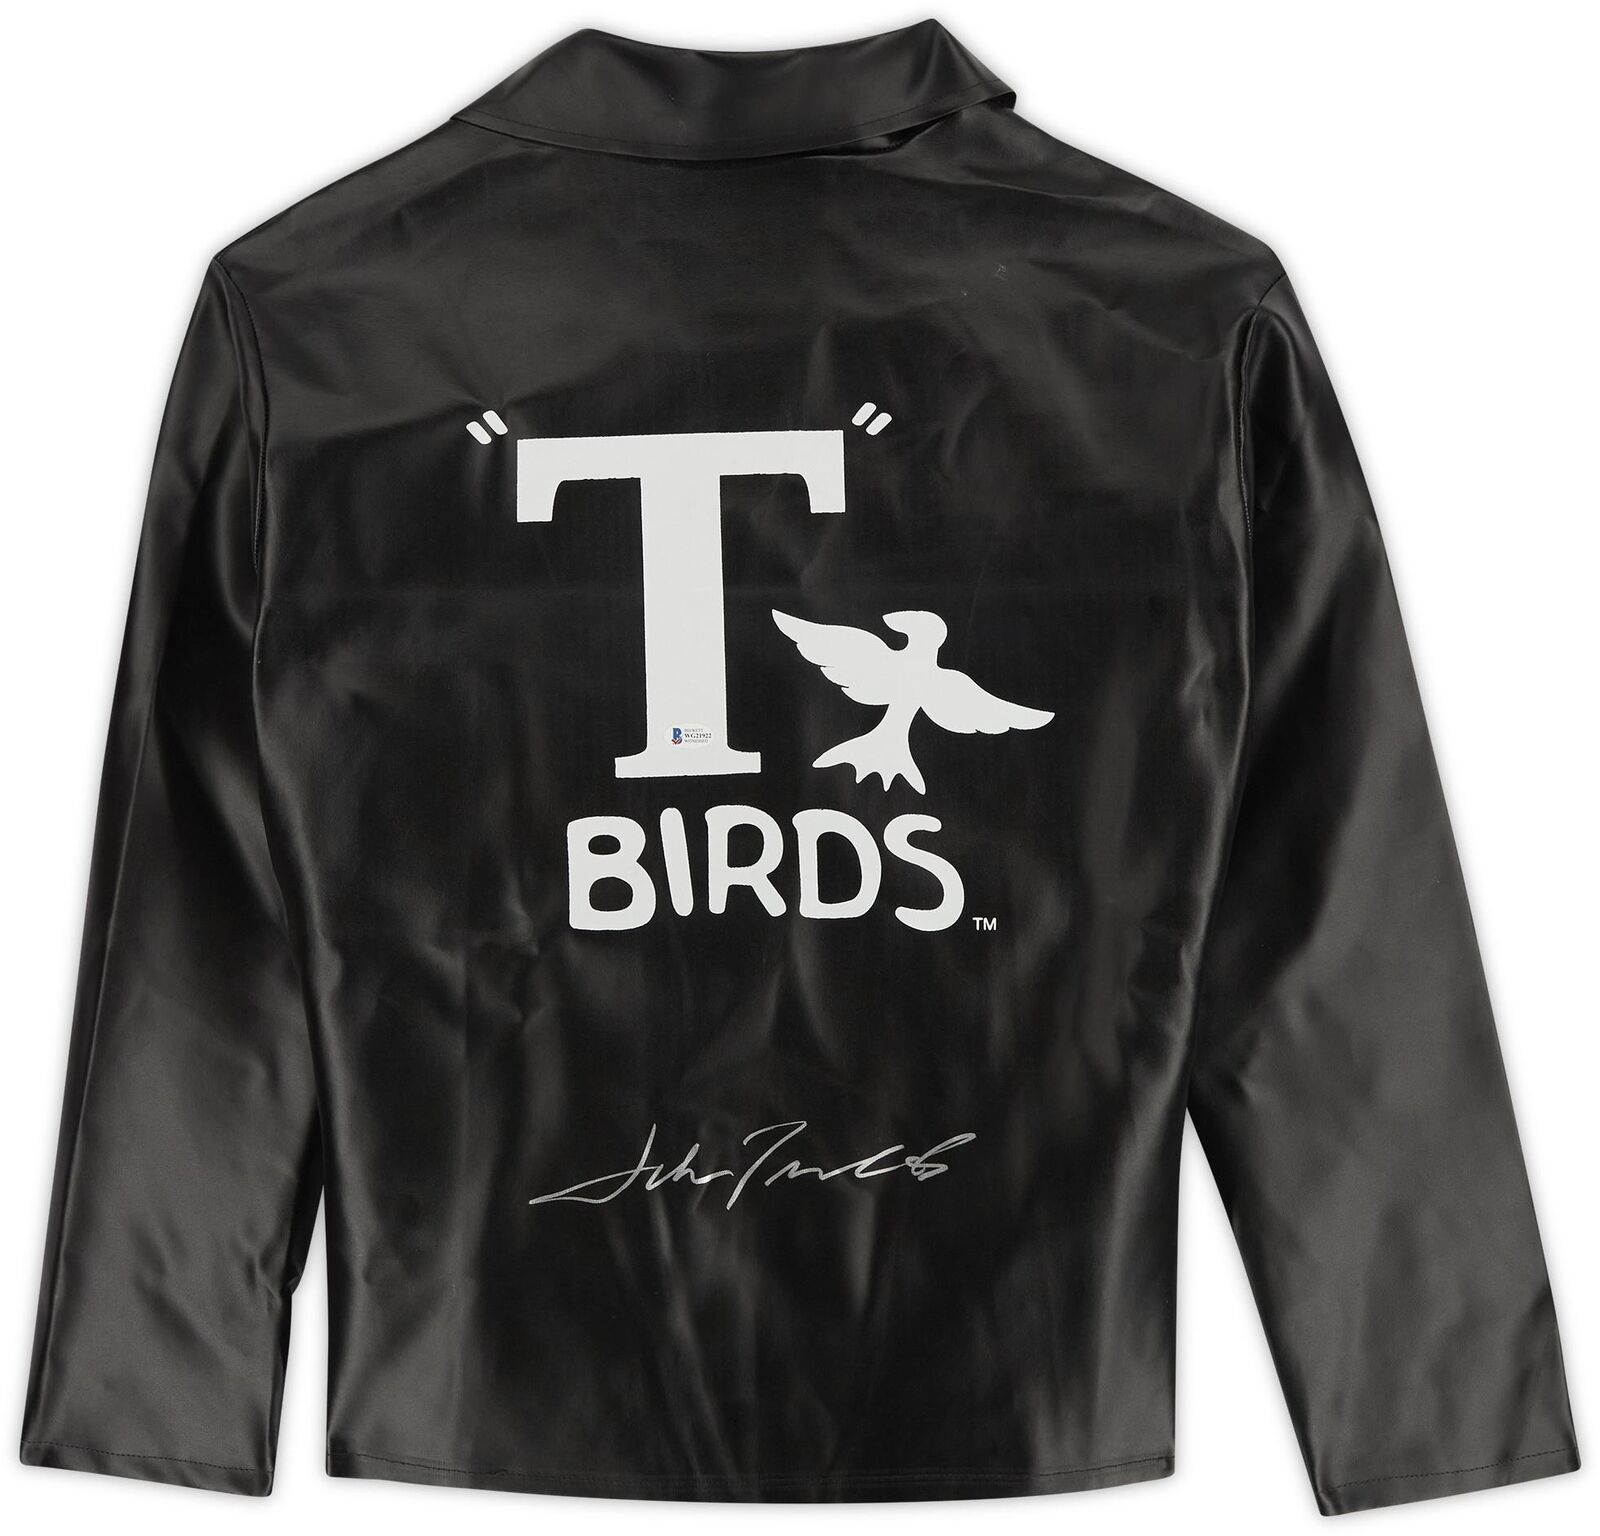 John Travolta Grease Autographed T Birds Leather Jacket